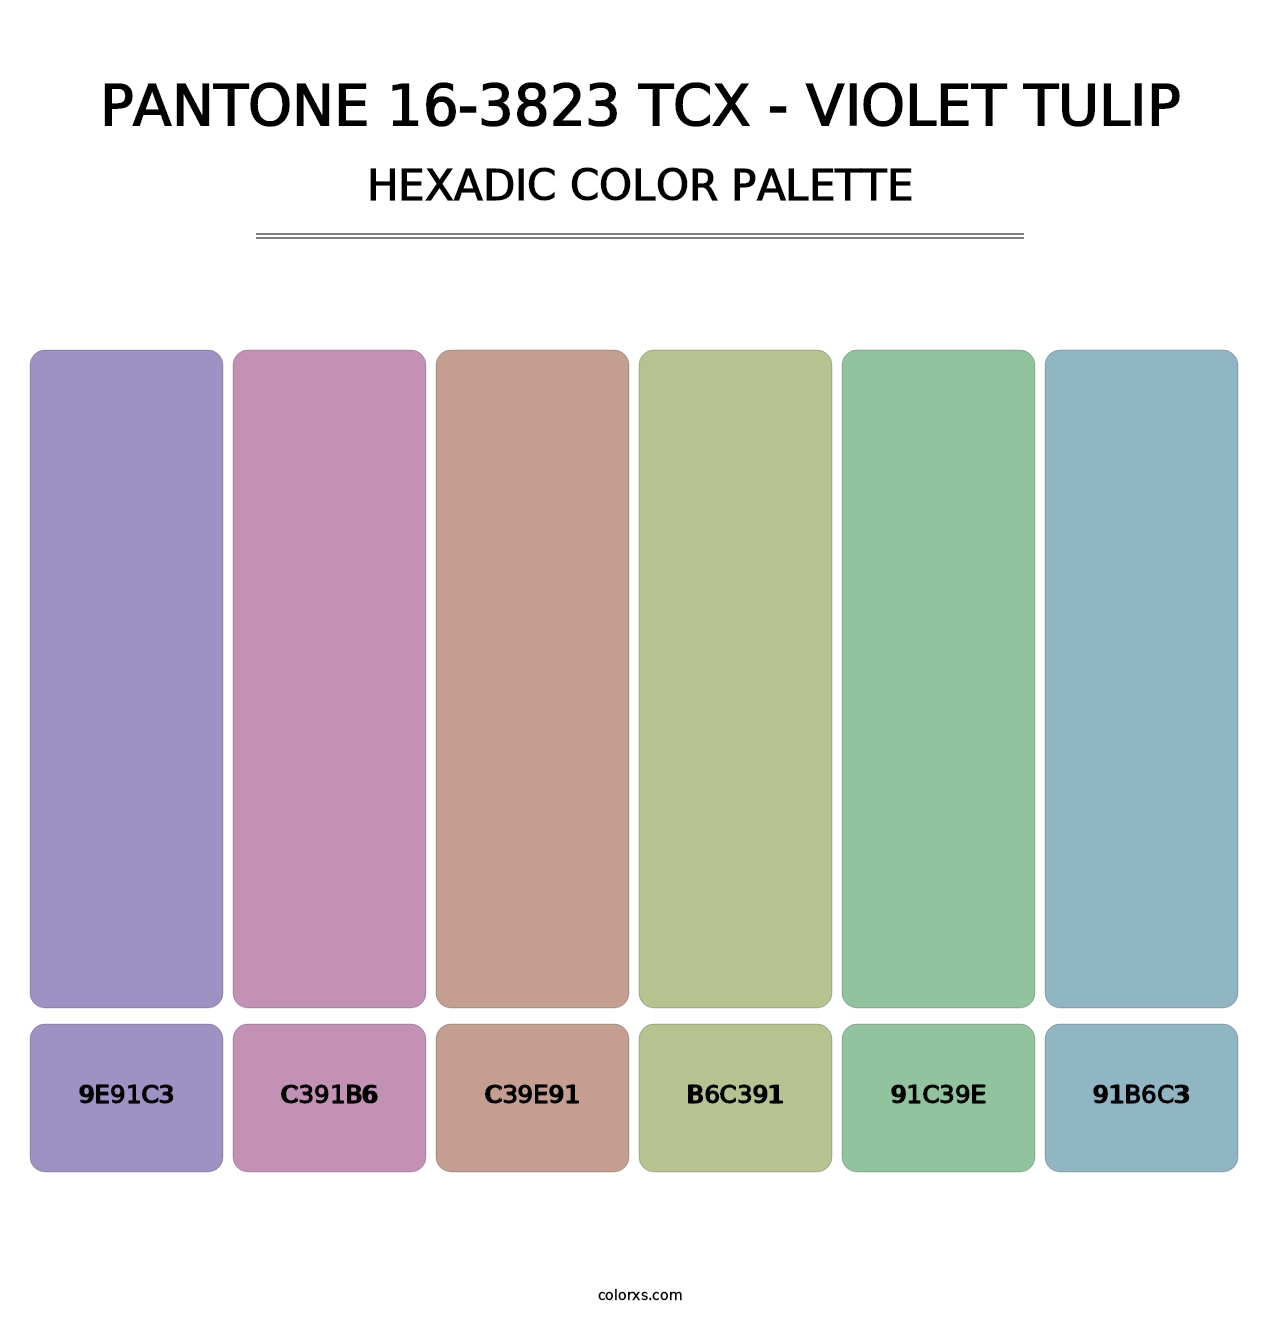 PANTONE 16-3823 TCX - Violet Tulip - Hexadic Color Palette